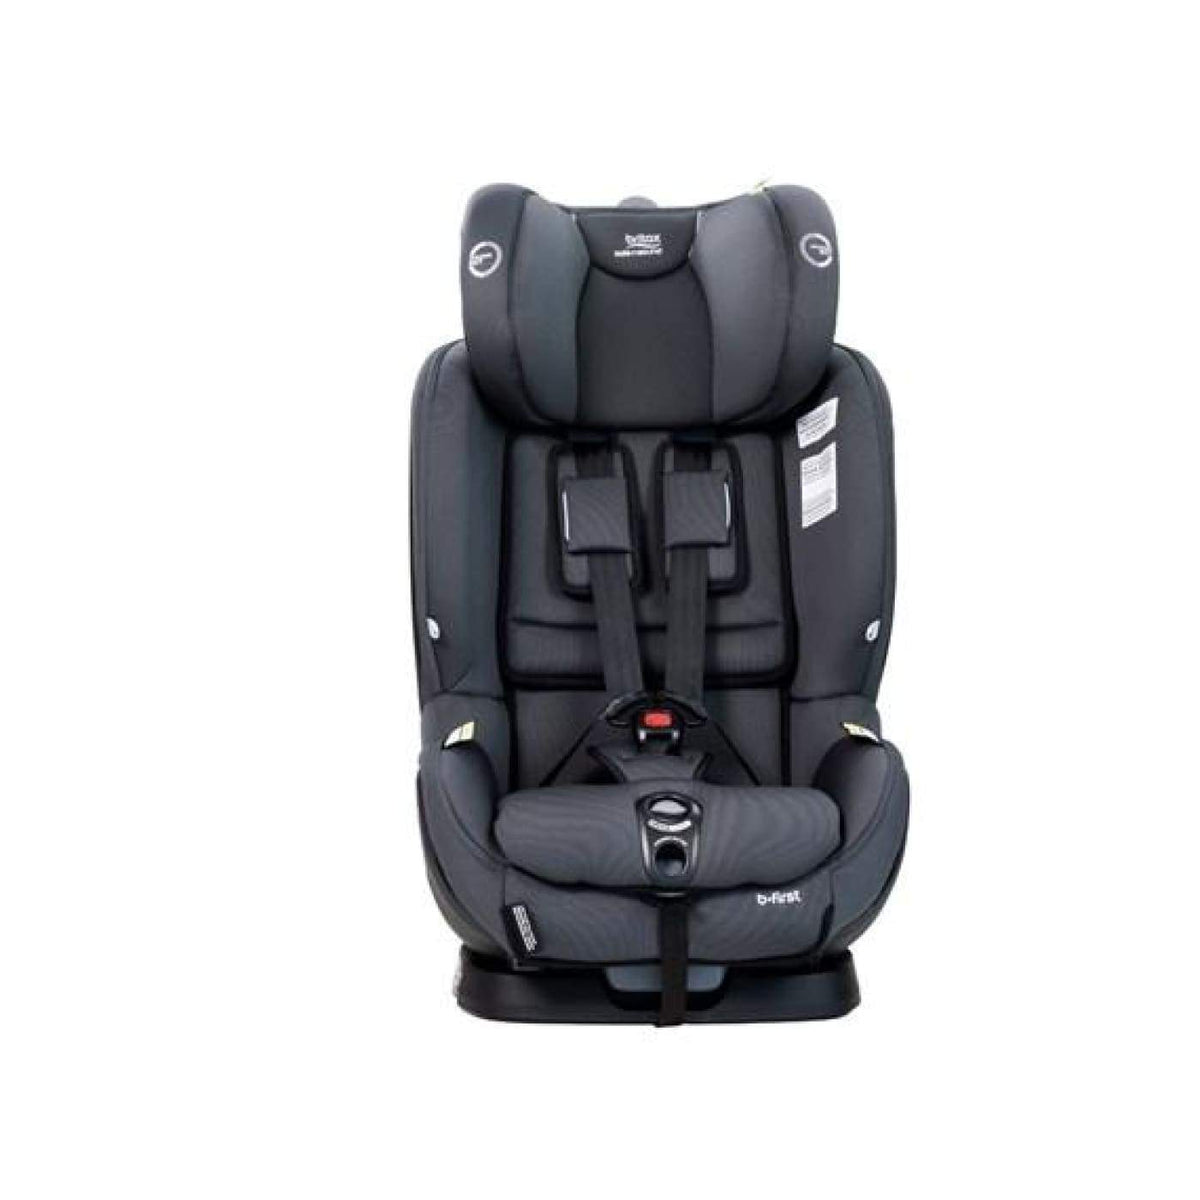 Britax SNS B-First Convertible Car Seat 0-4YR - Charcoal - CAR SEATS - CONV ISOFIX CAR SEATS (0-4YR)